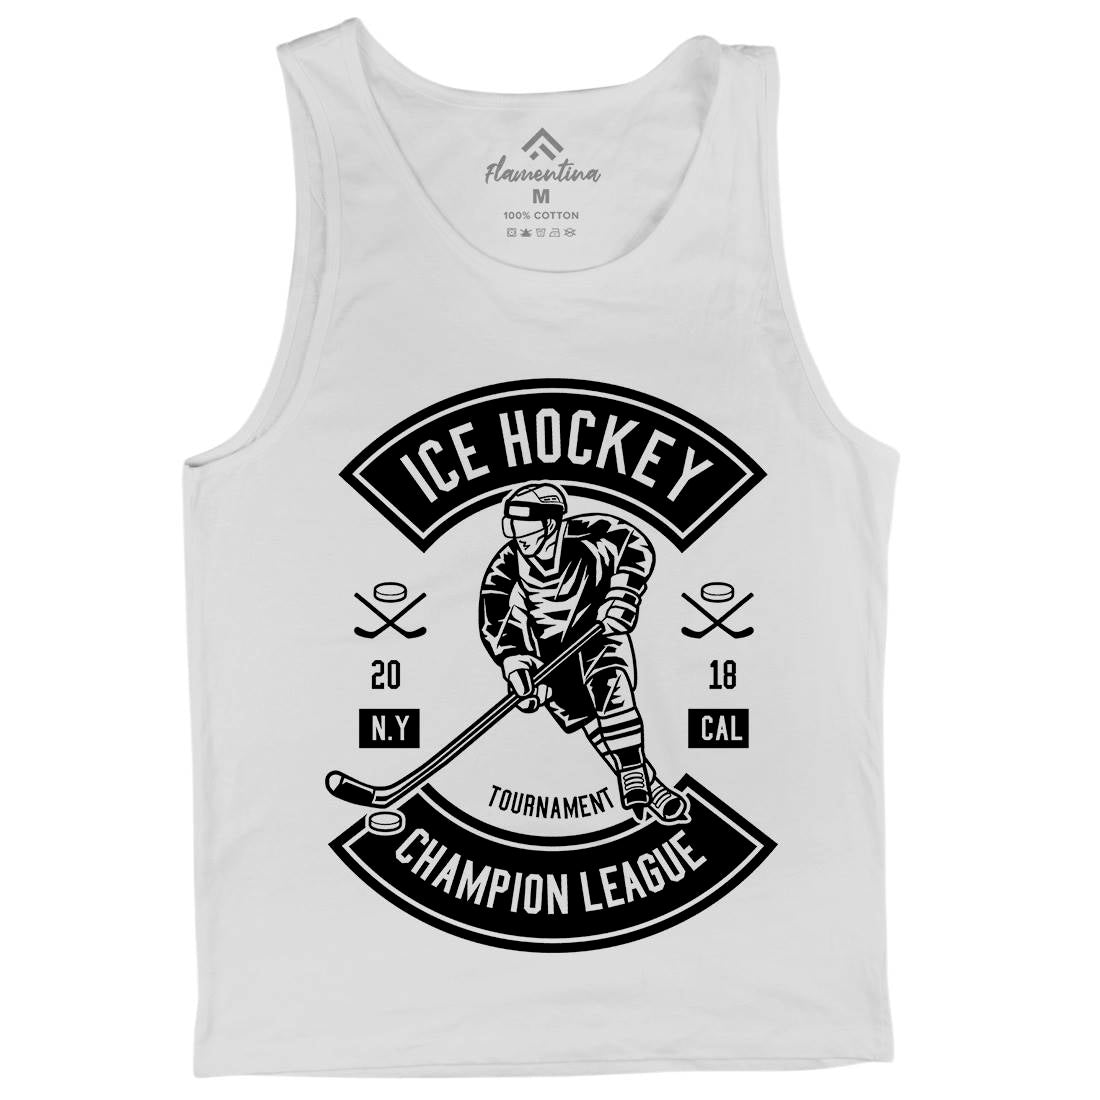 Ice Hockey Champion League Mens Tank Top Vest Sport B564